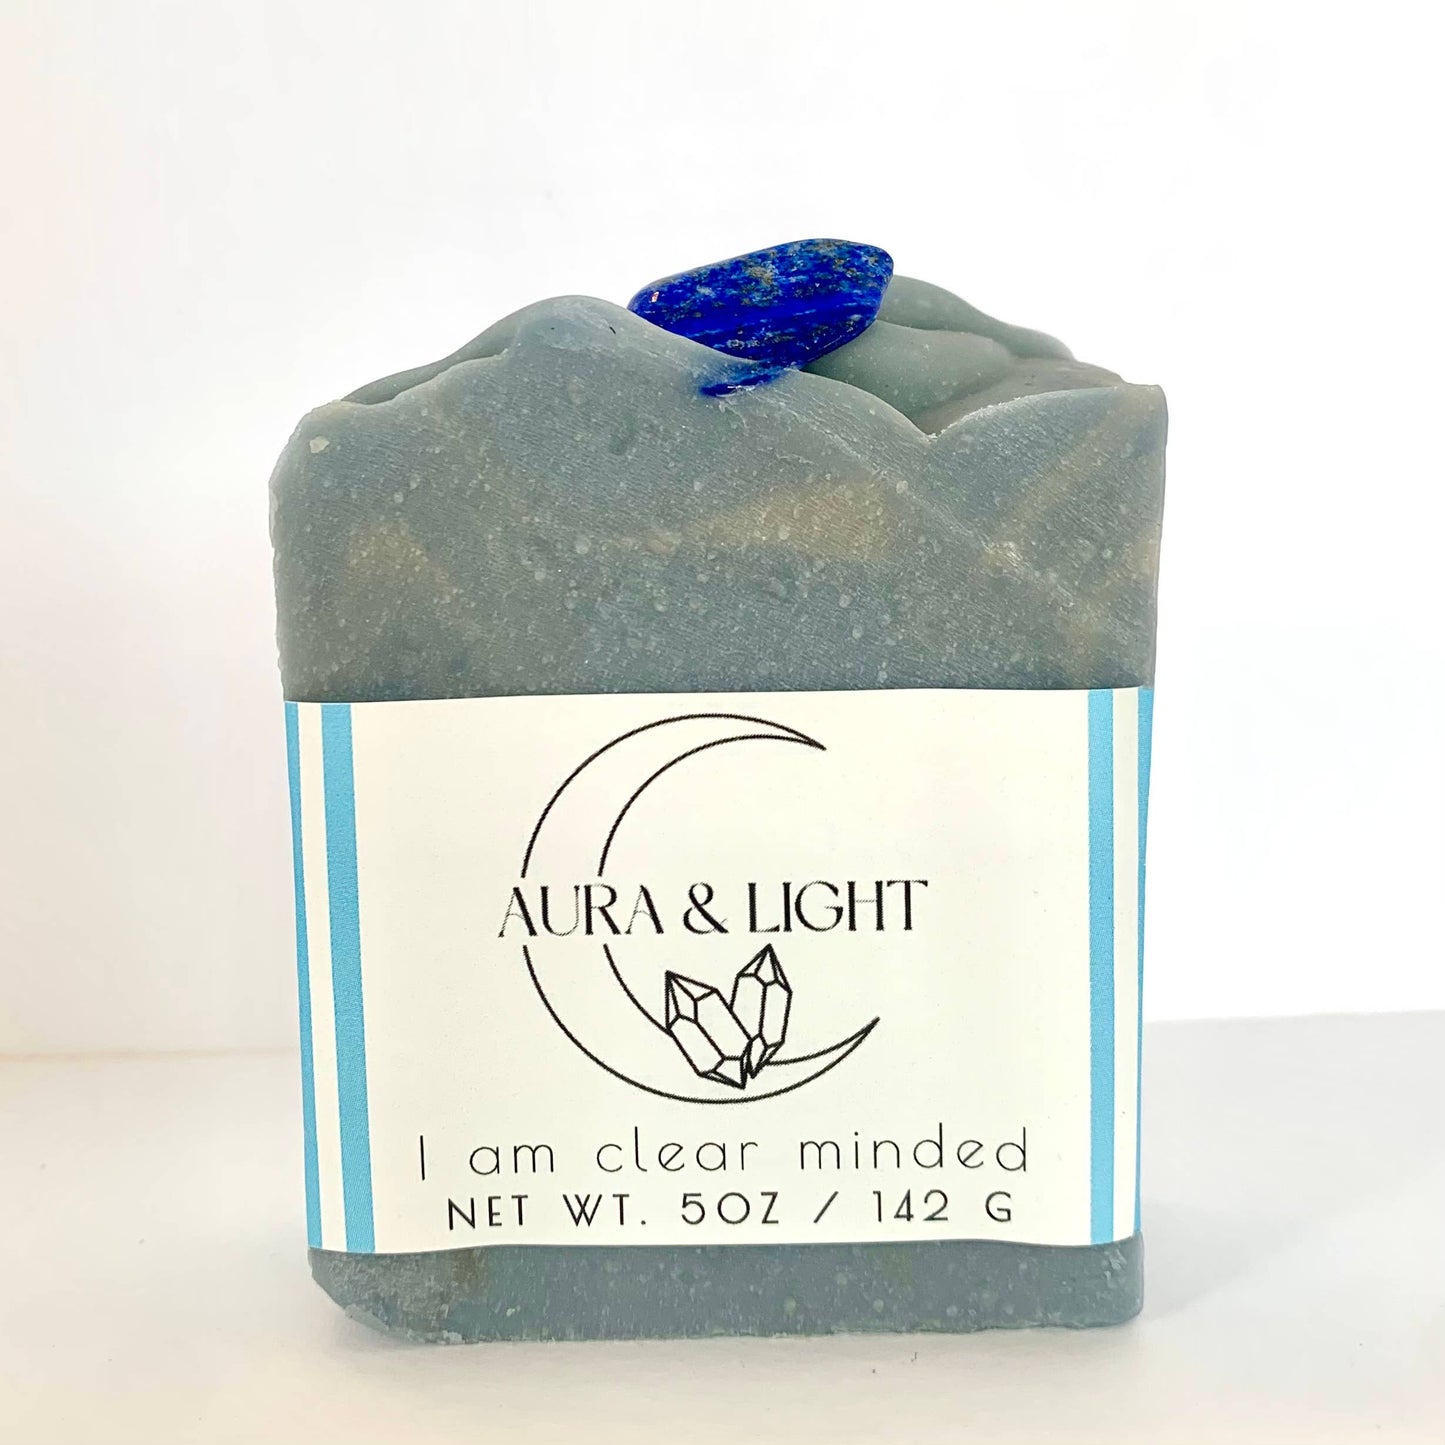 I am clear minded - Aura & Light Crystal Soap